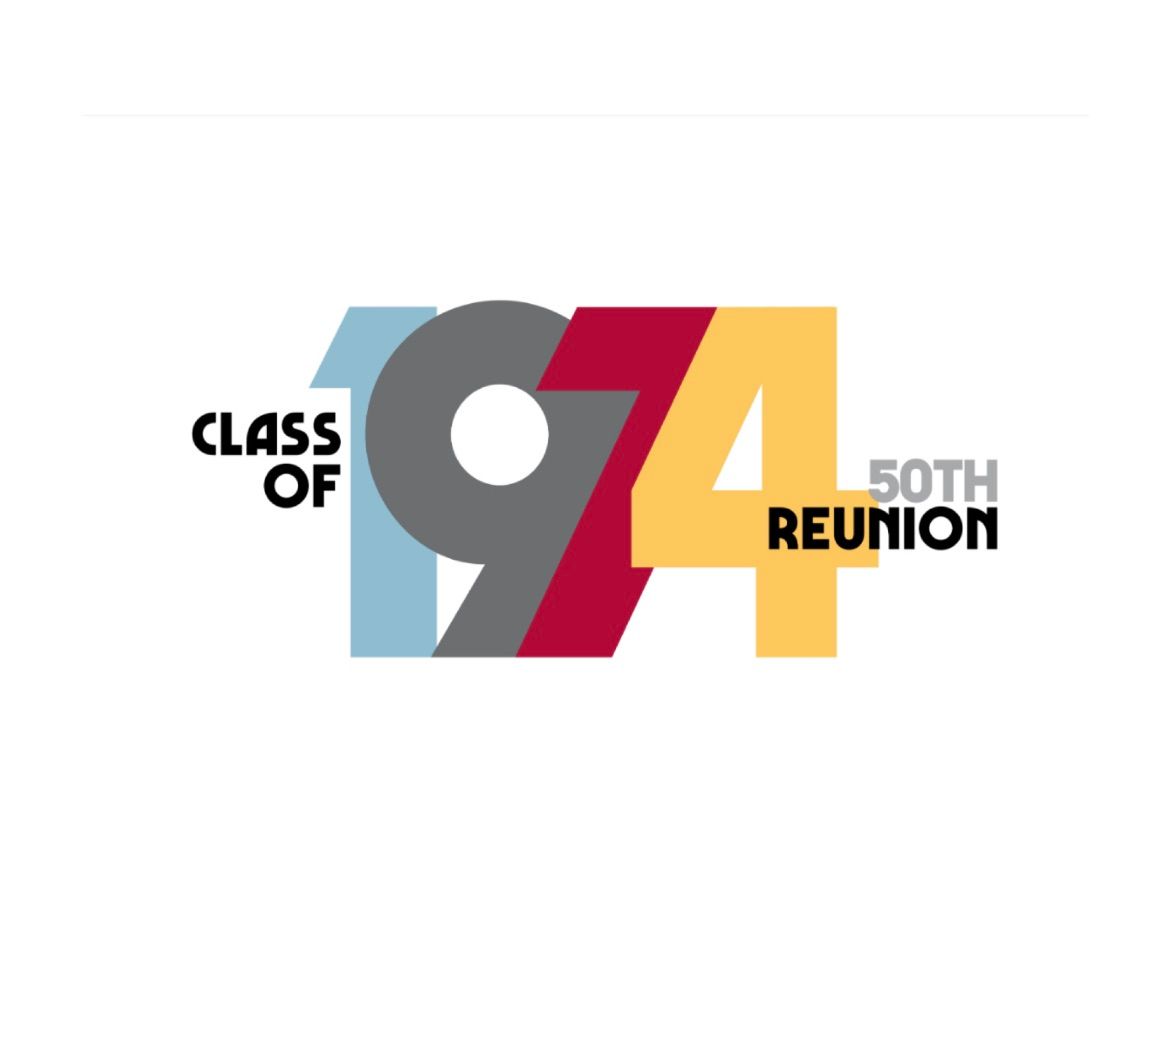 LaSalle Class of 74 50th Reunion 